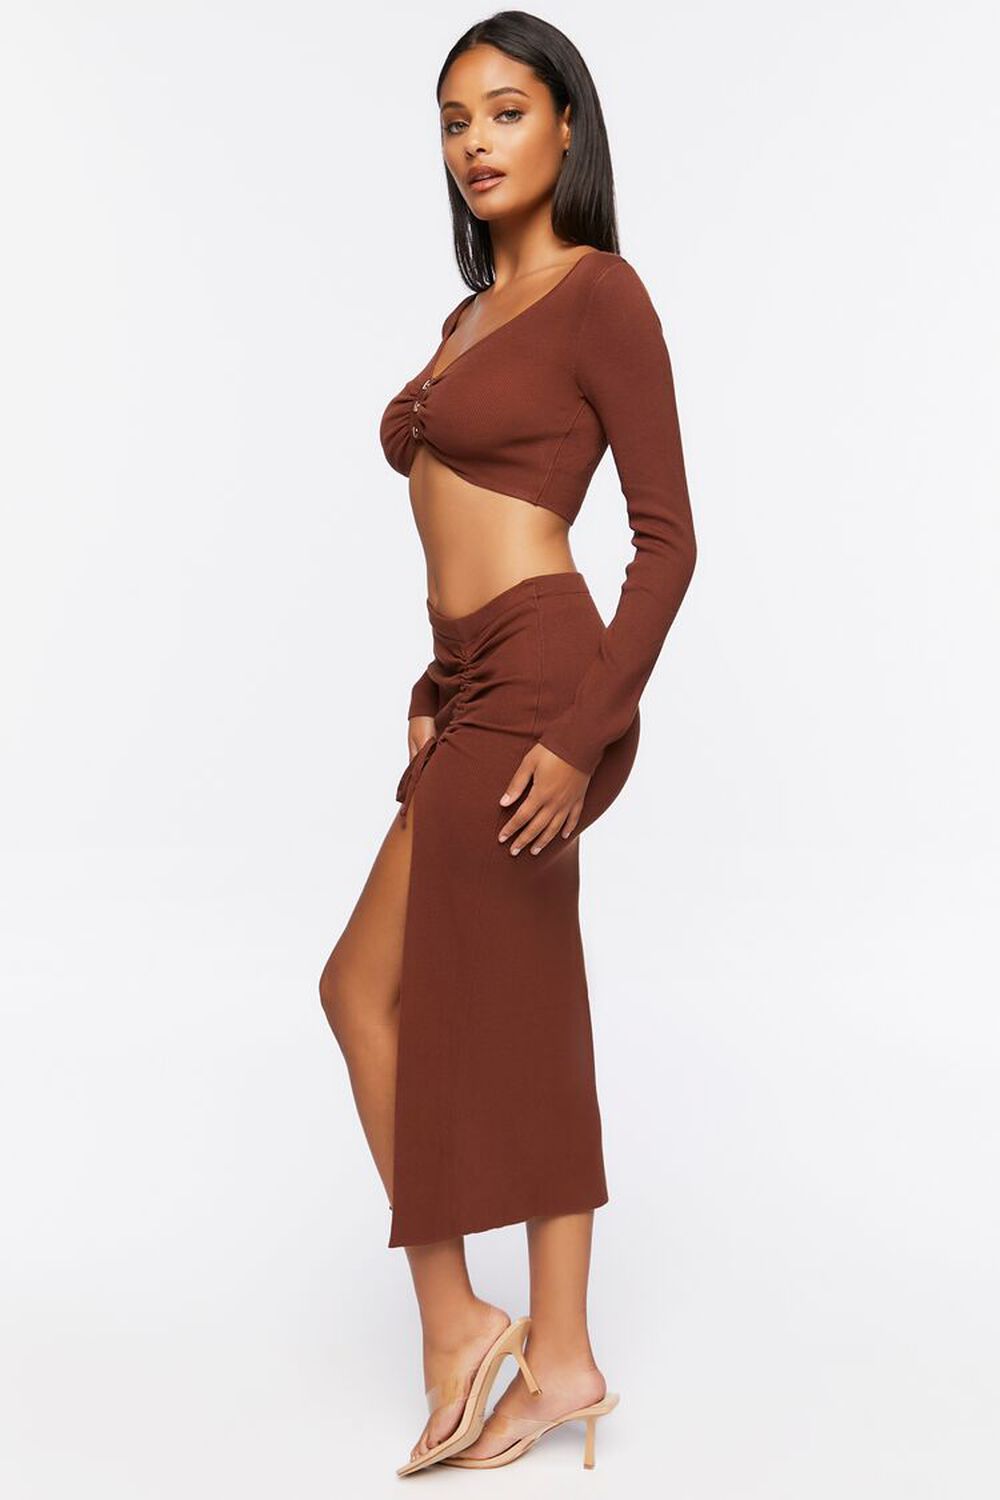 COCOA Ruched Crop Top & Leg-Slit Midi Skirt Set, image 2